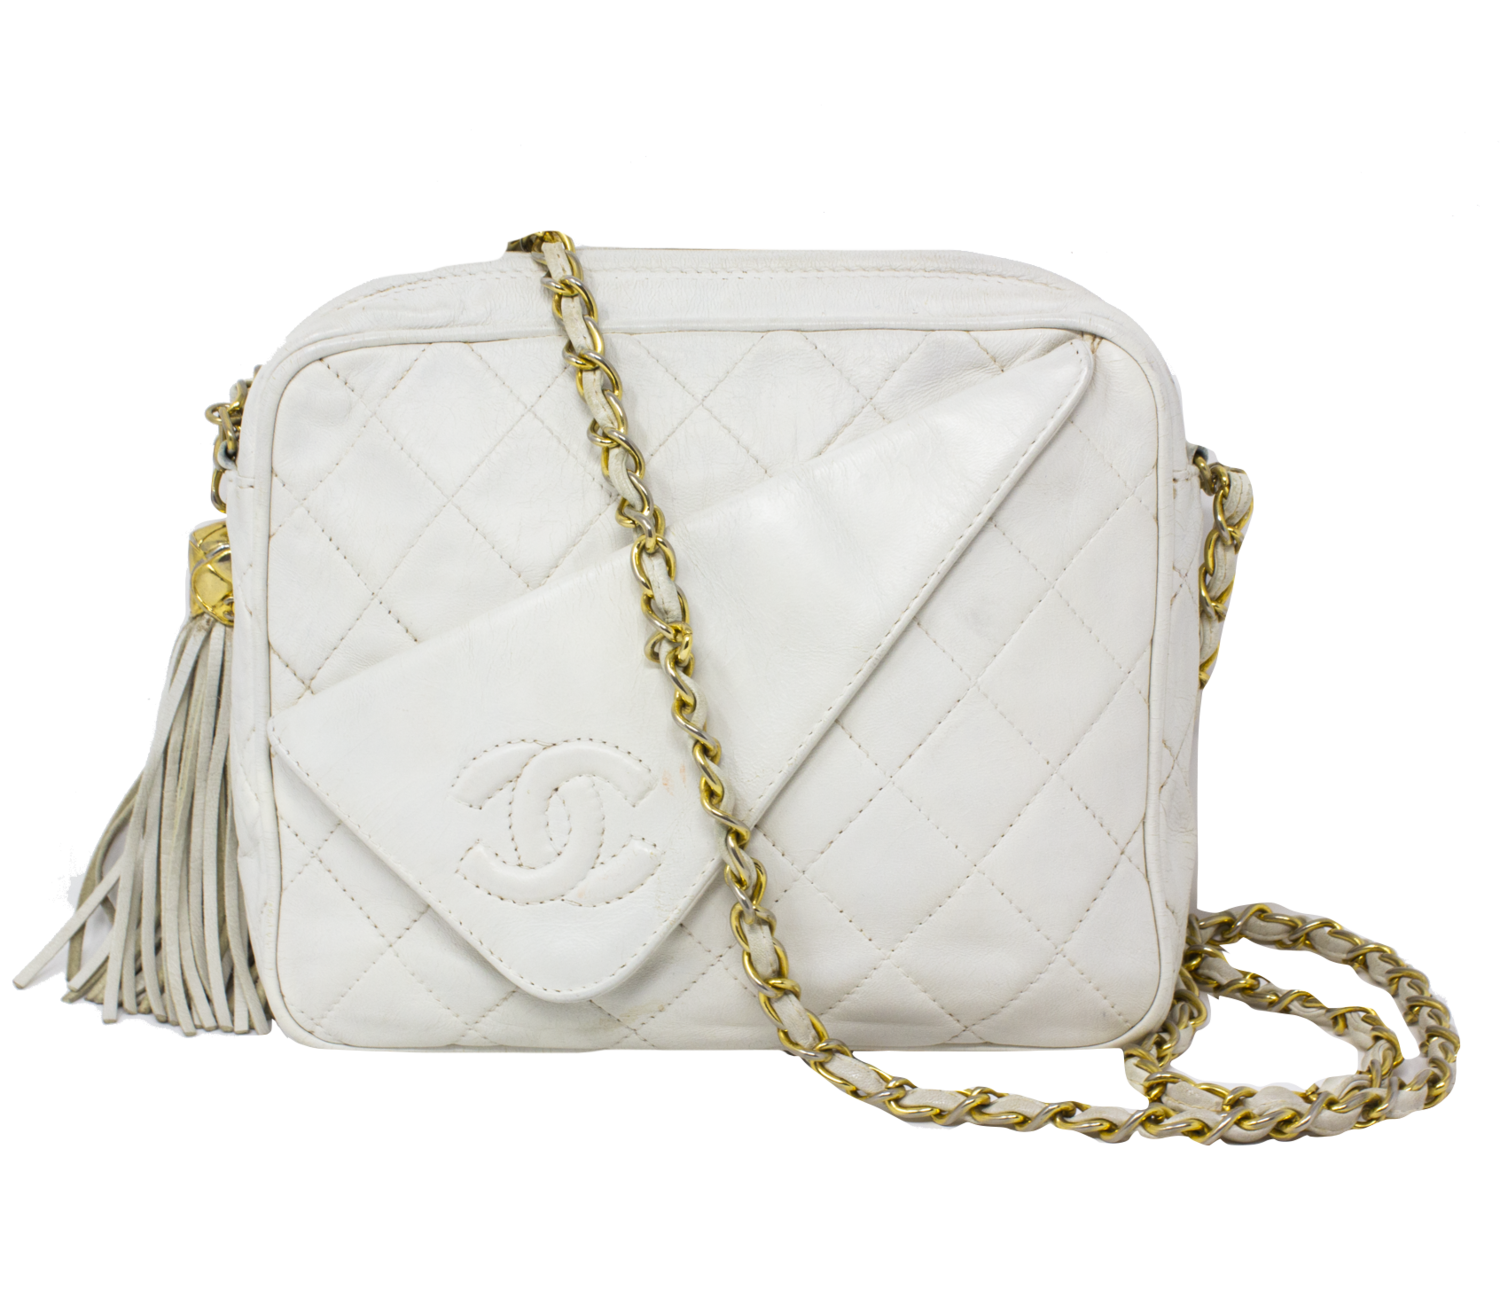 chanel white bag